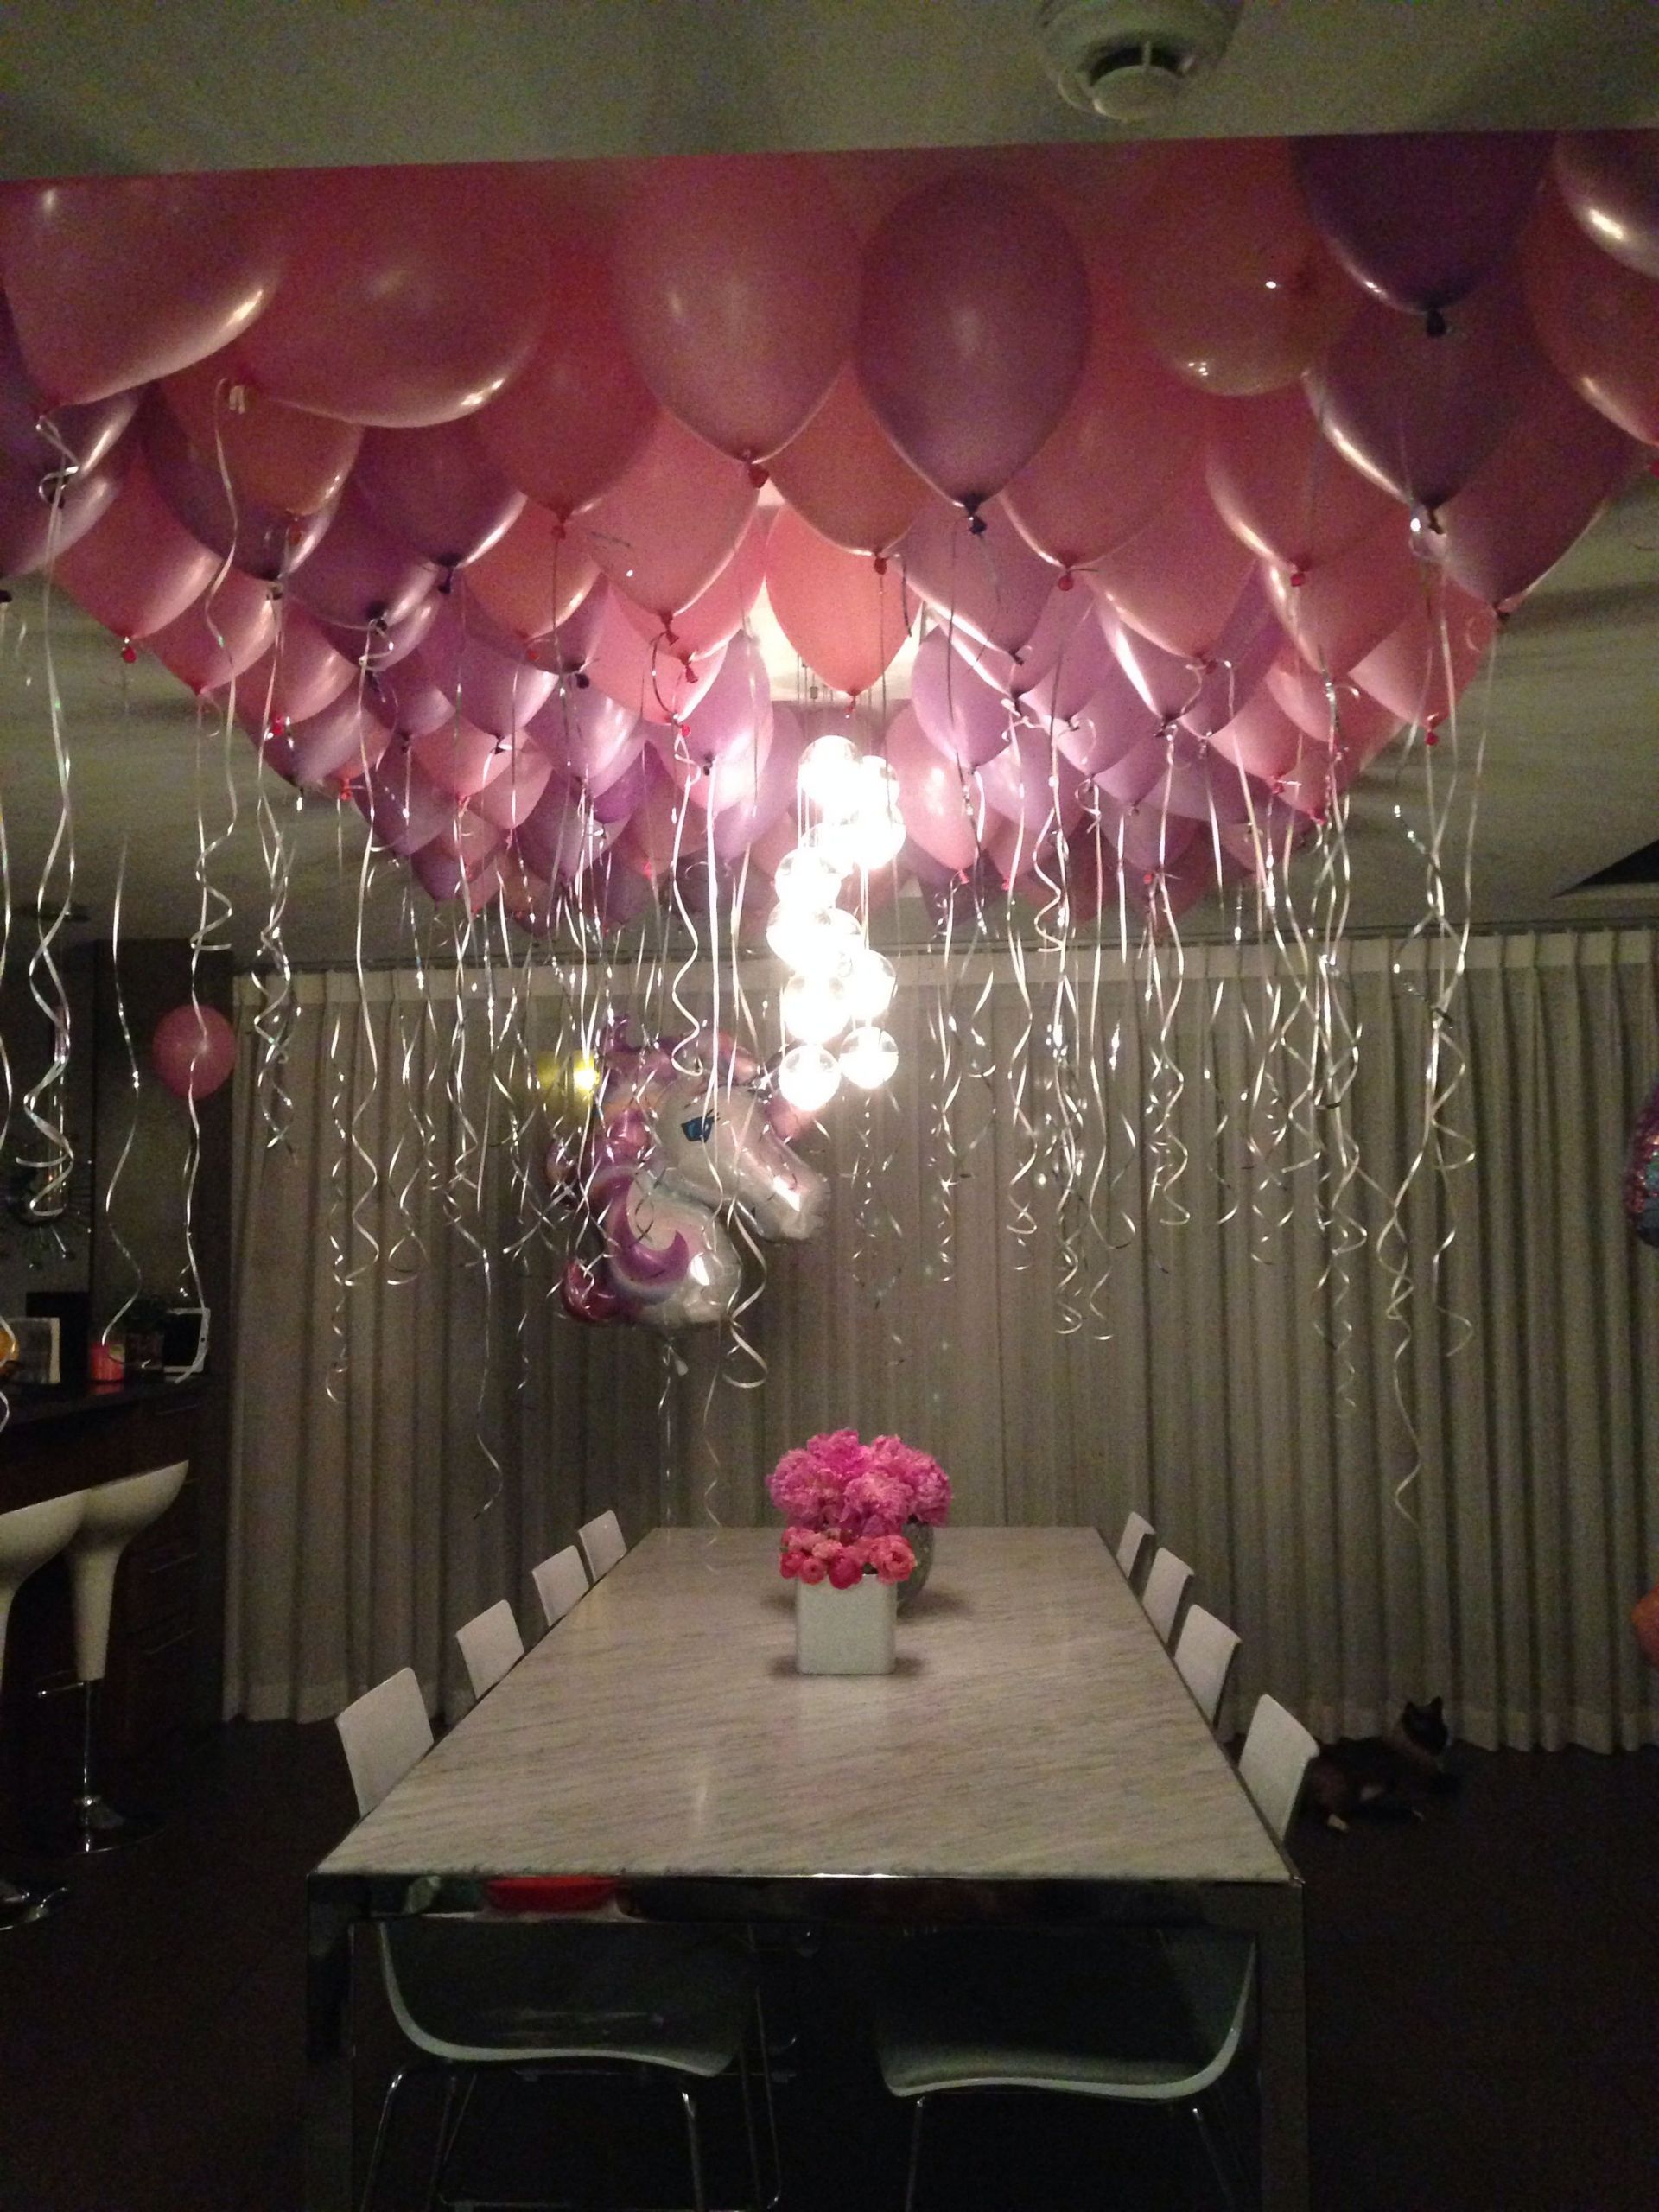 Nine Year Old Birthday Party Ideas
 Balloon display 6 year old girl s Birthday